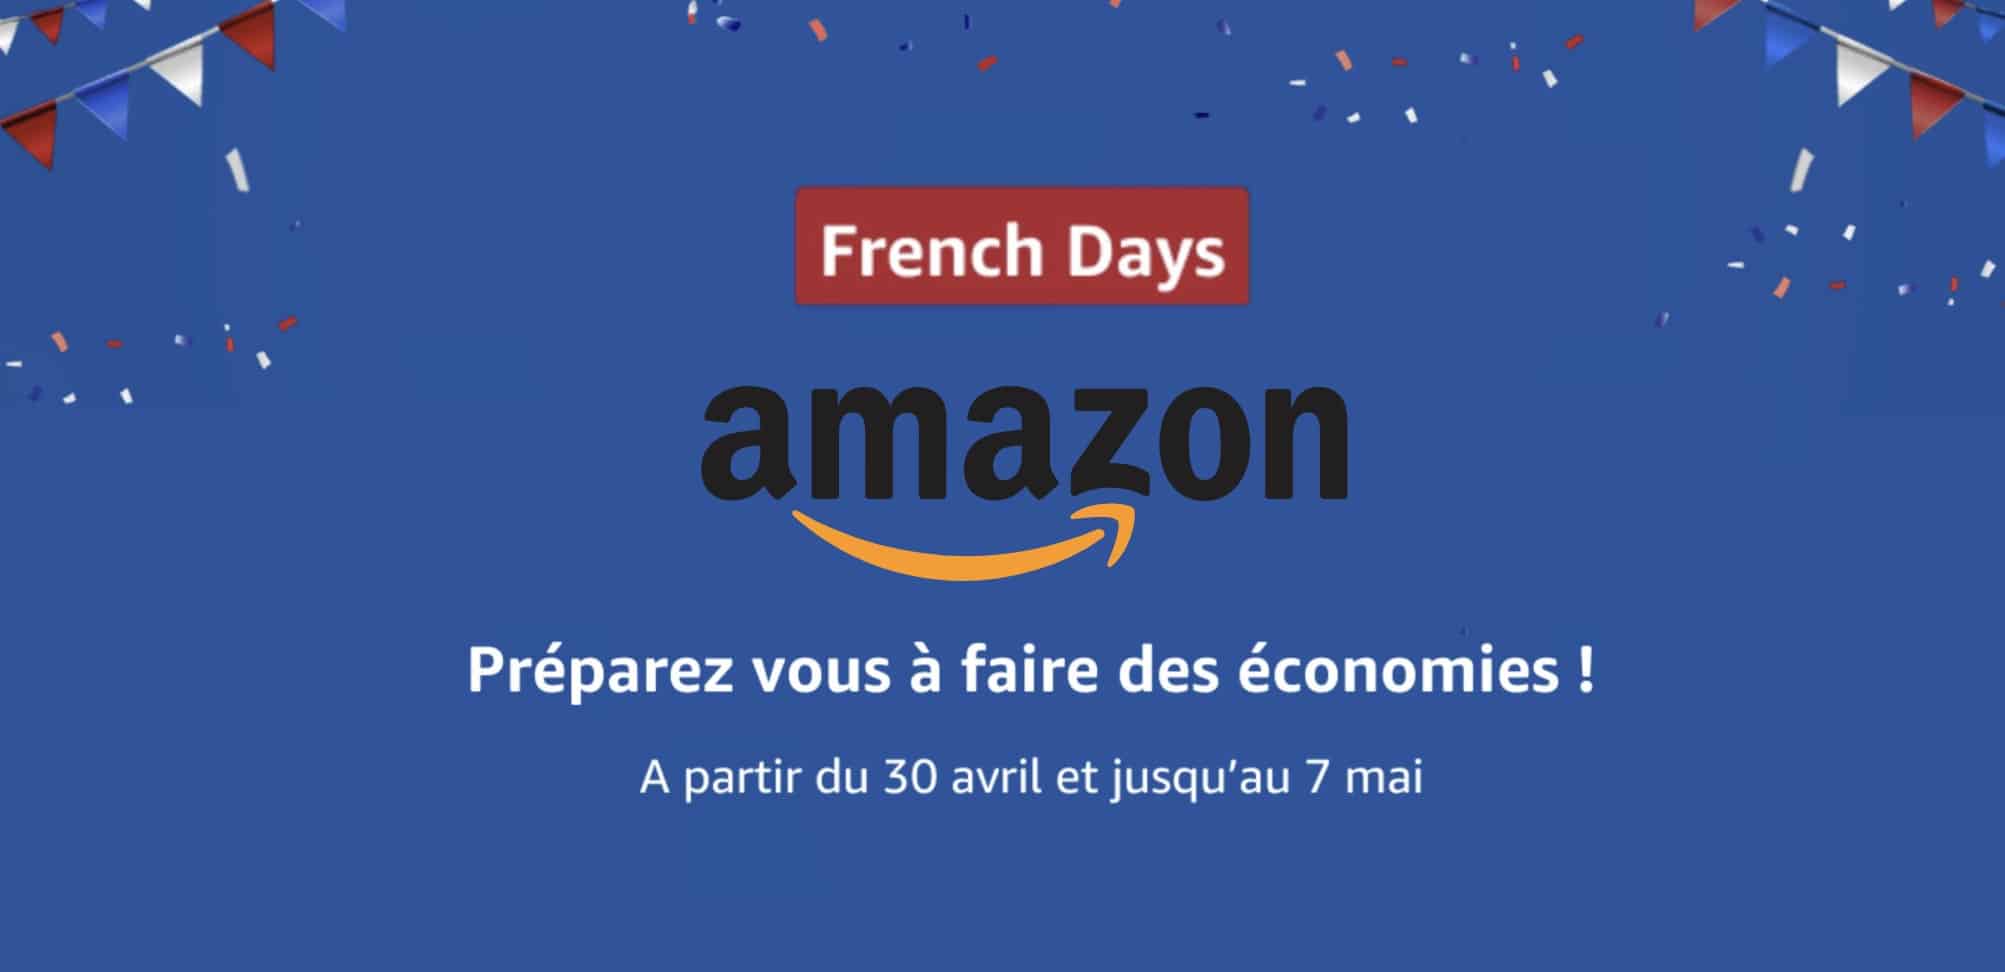 French Days Amazon